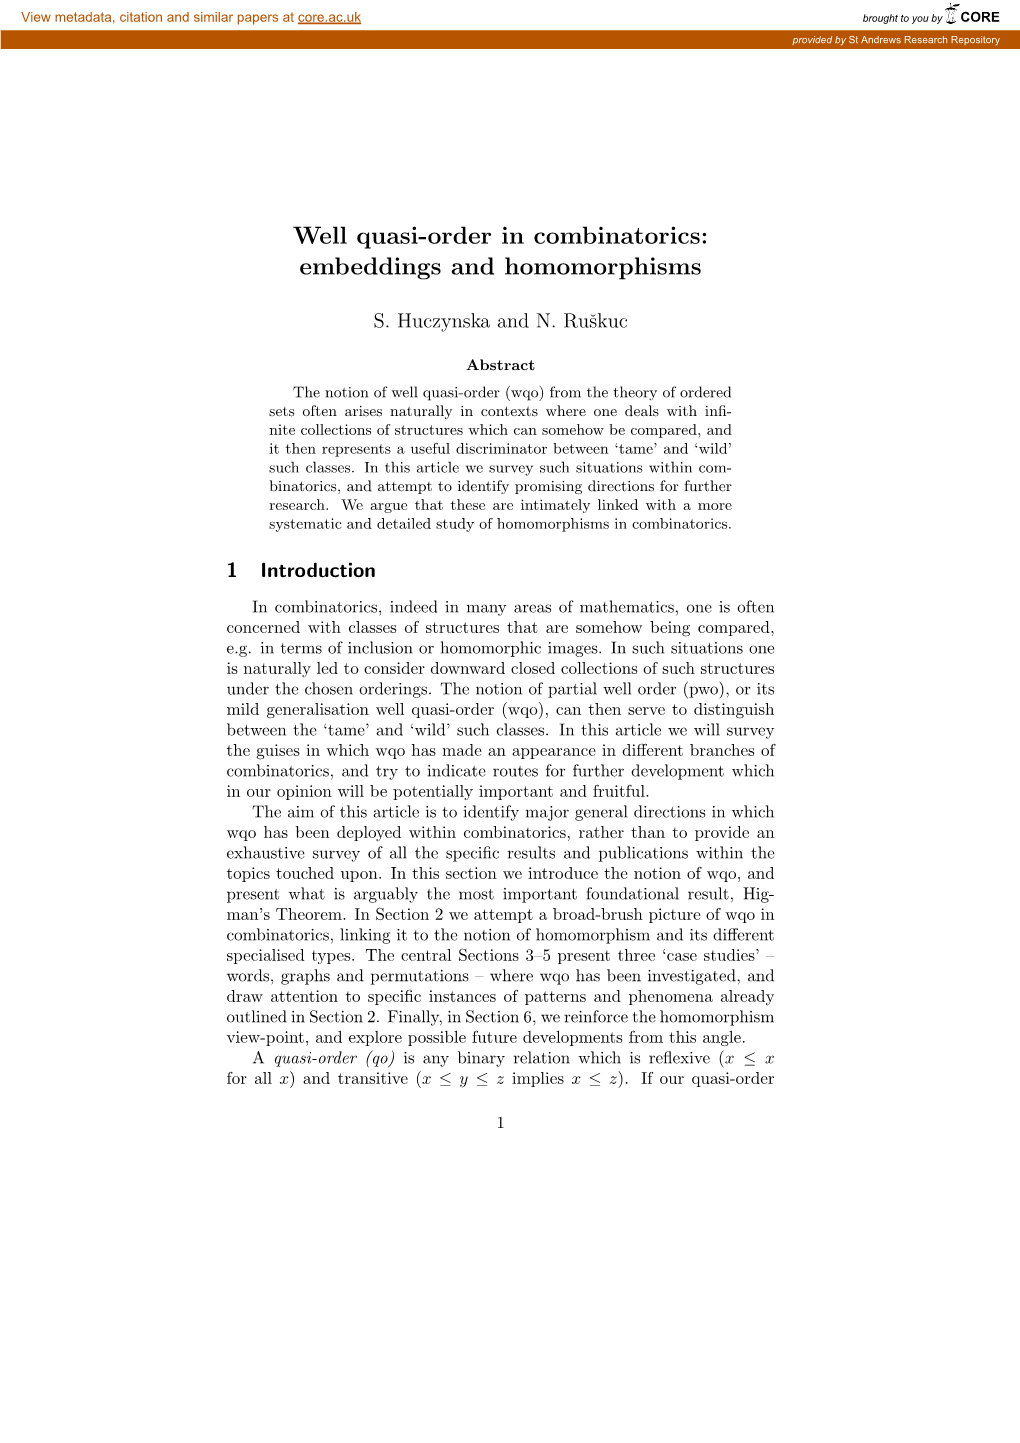 Well Quasi-Order in Combinatorics: Embeddings and Homomorphisms